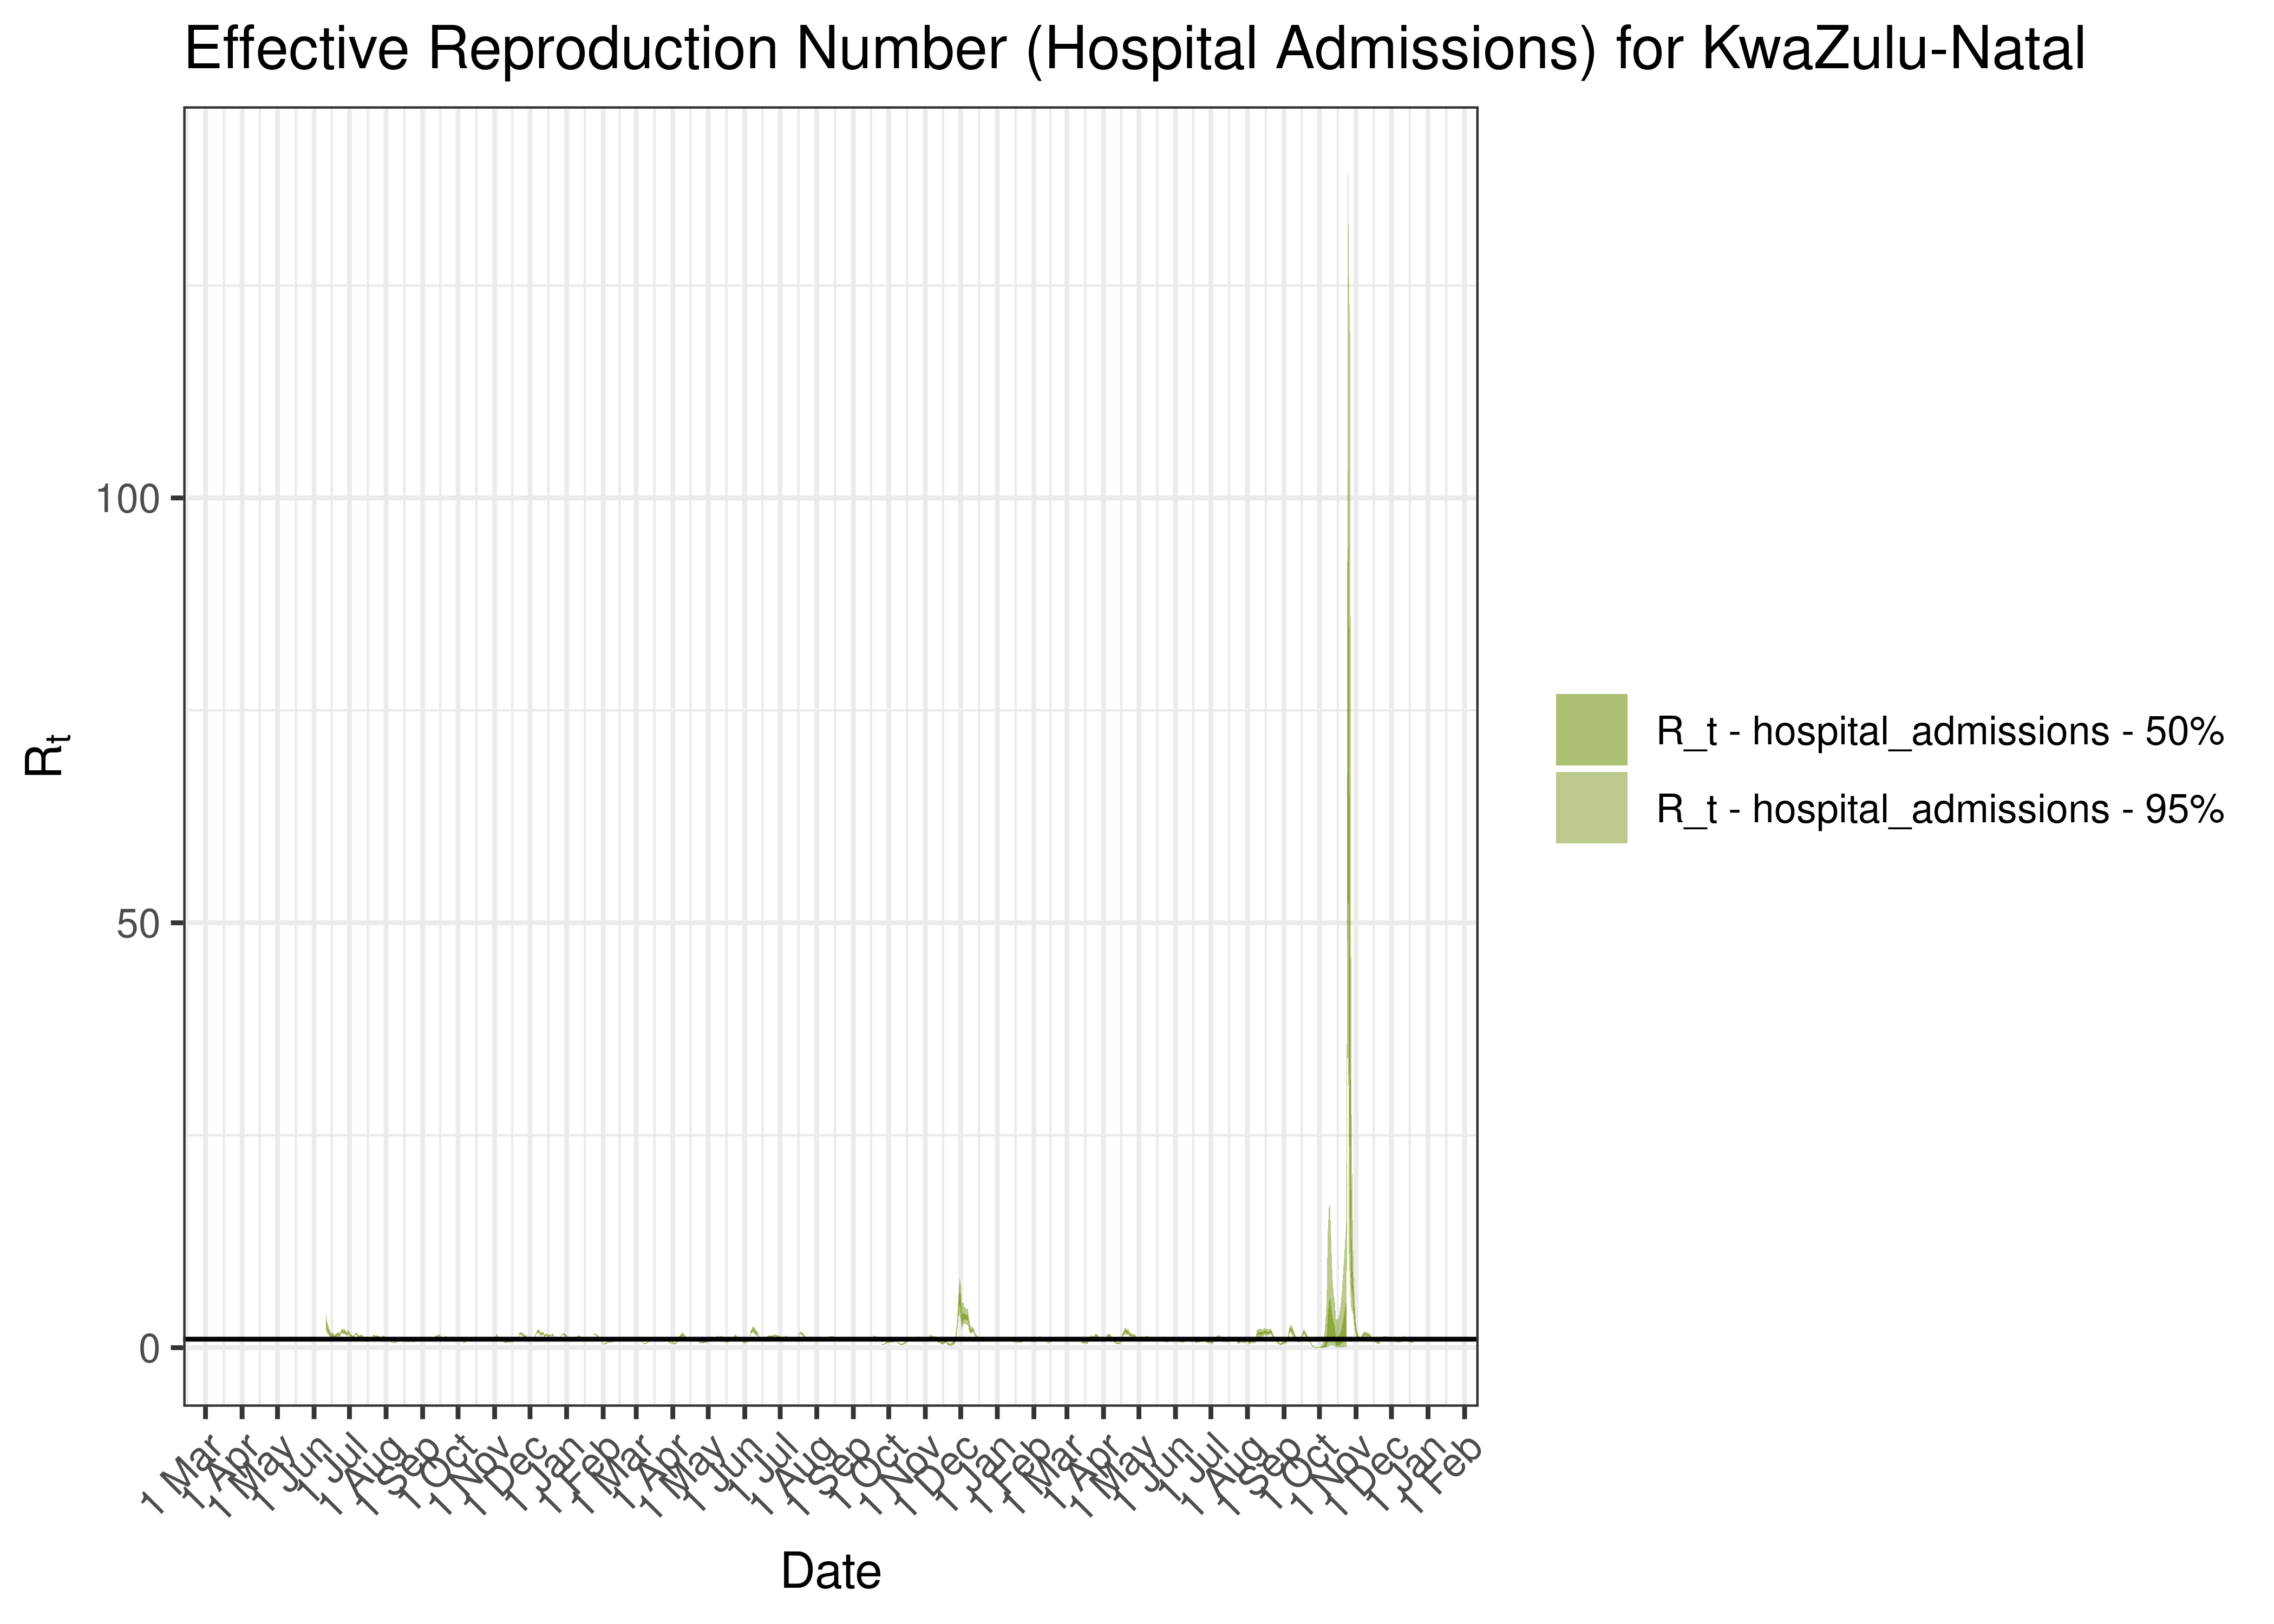 Estimated Effective Reproduction Number Based on Hospital Admissions for KwaZulu-Natal since 1 April 2020